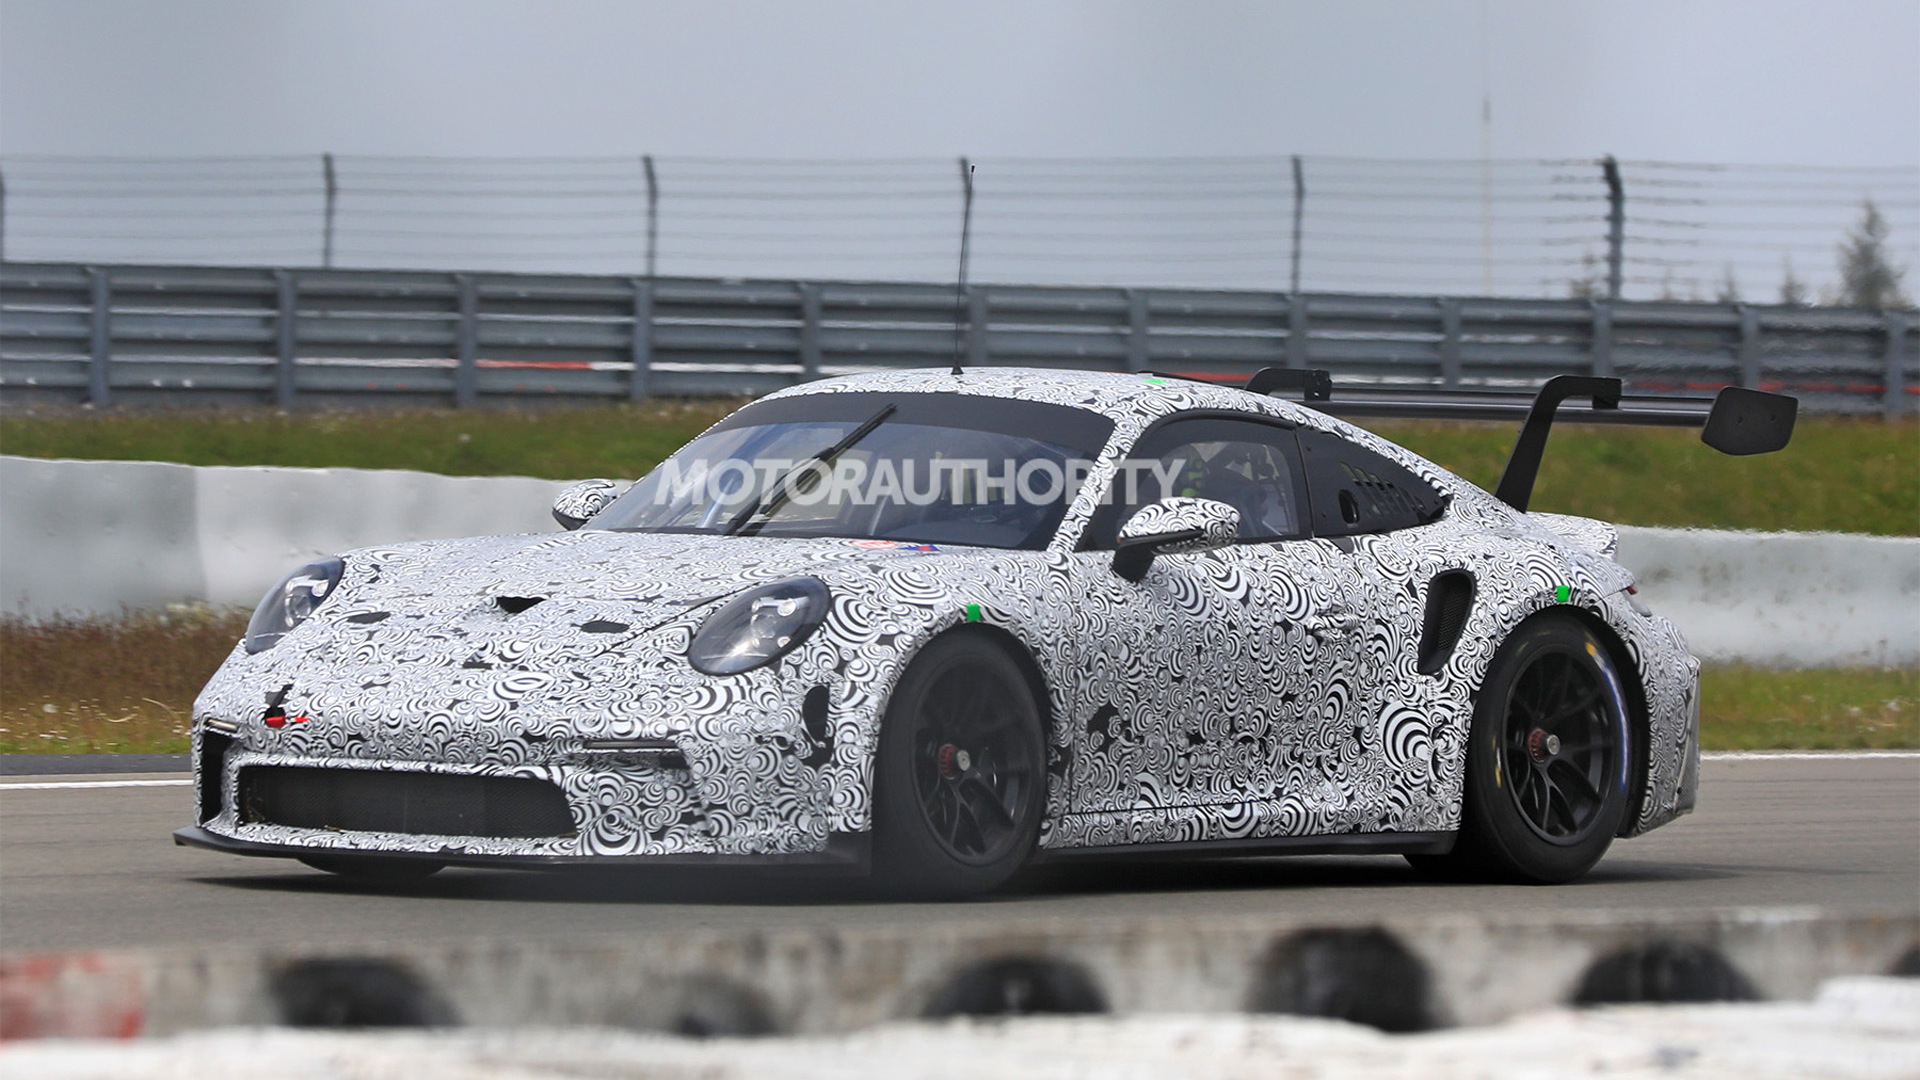 2022 Porsche 911 GT3 R race car spy shots - Photo credit: S. Baldauf/SB-Medien